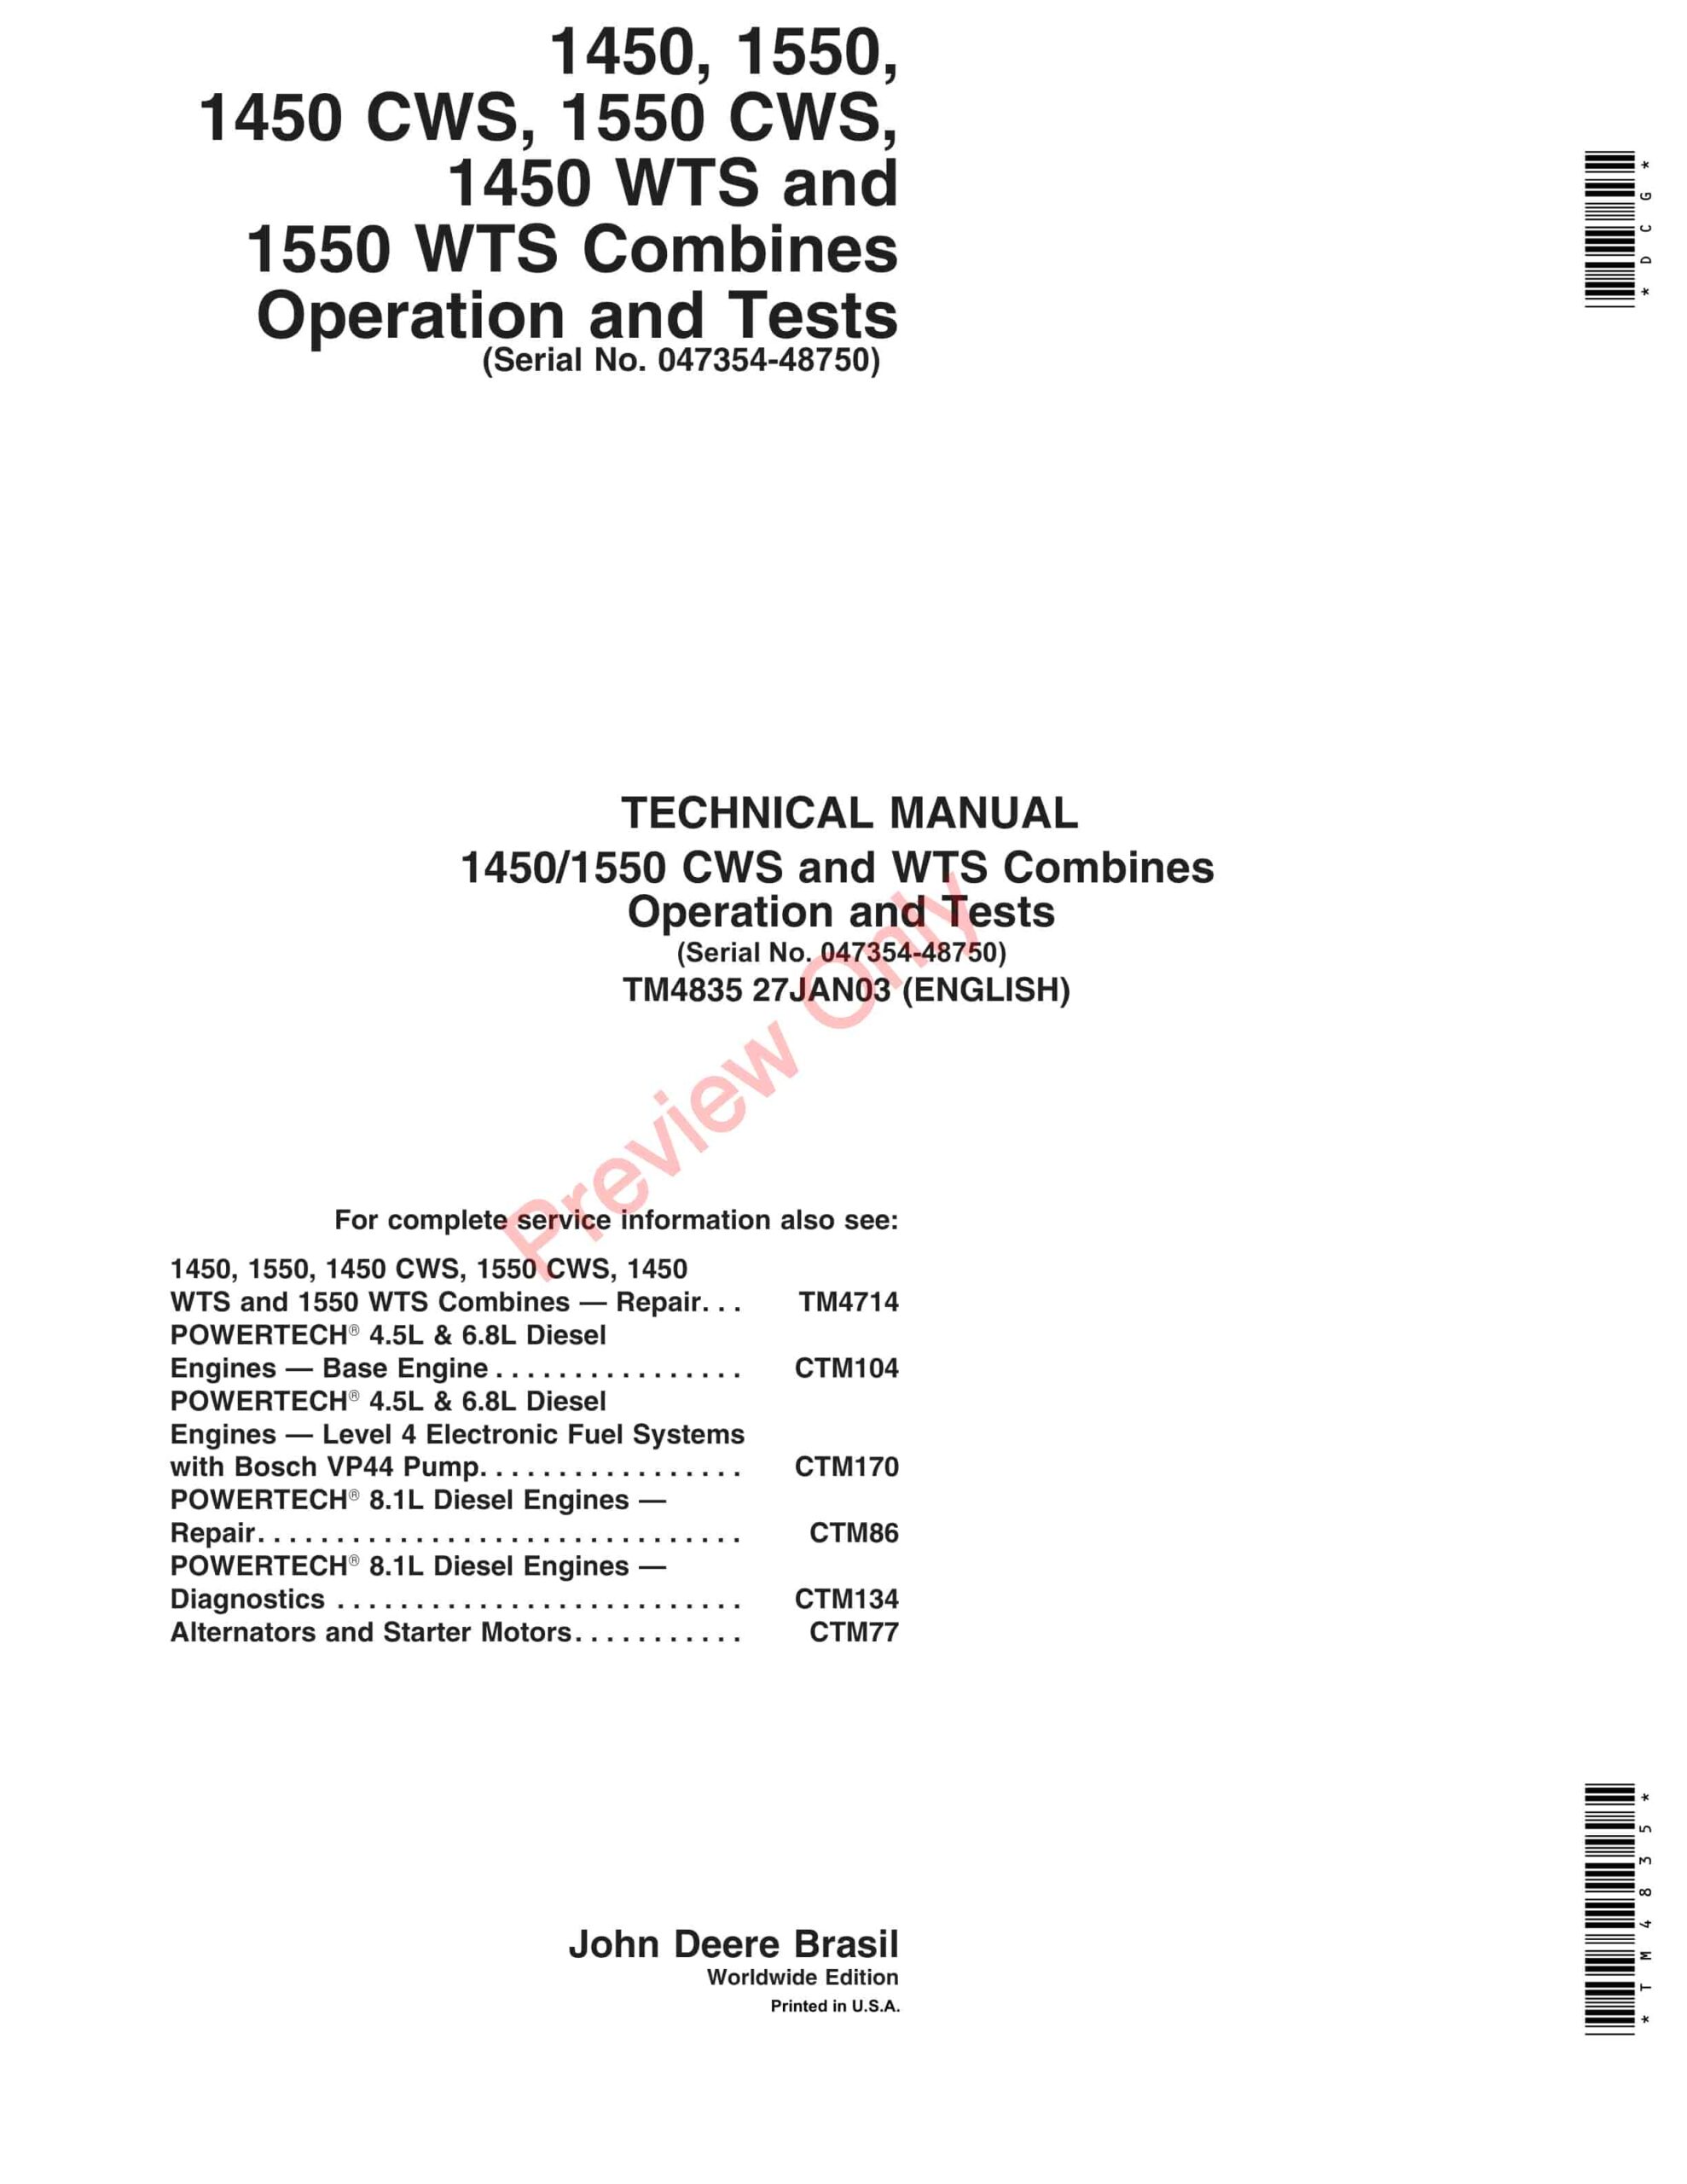 John Deere 1450, 1550, 1450CWS, 1550 CWS Combines Technical Manual TM4835 2JAN03-1